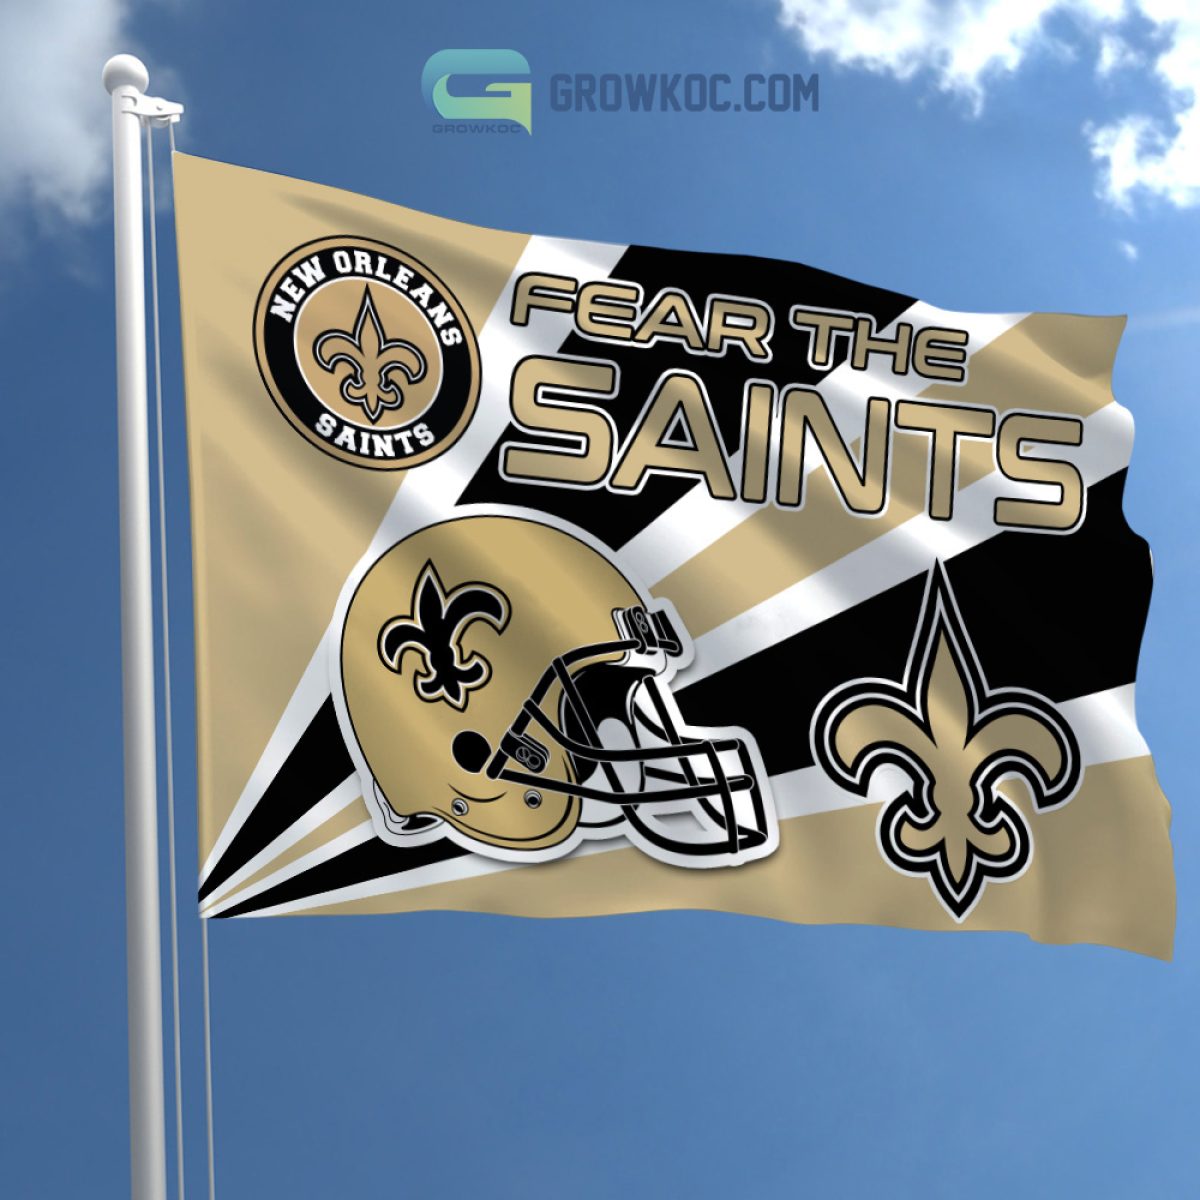 saints football logo wallpaper